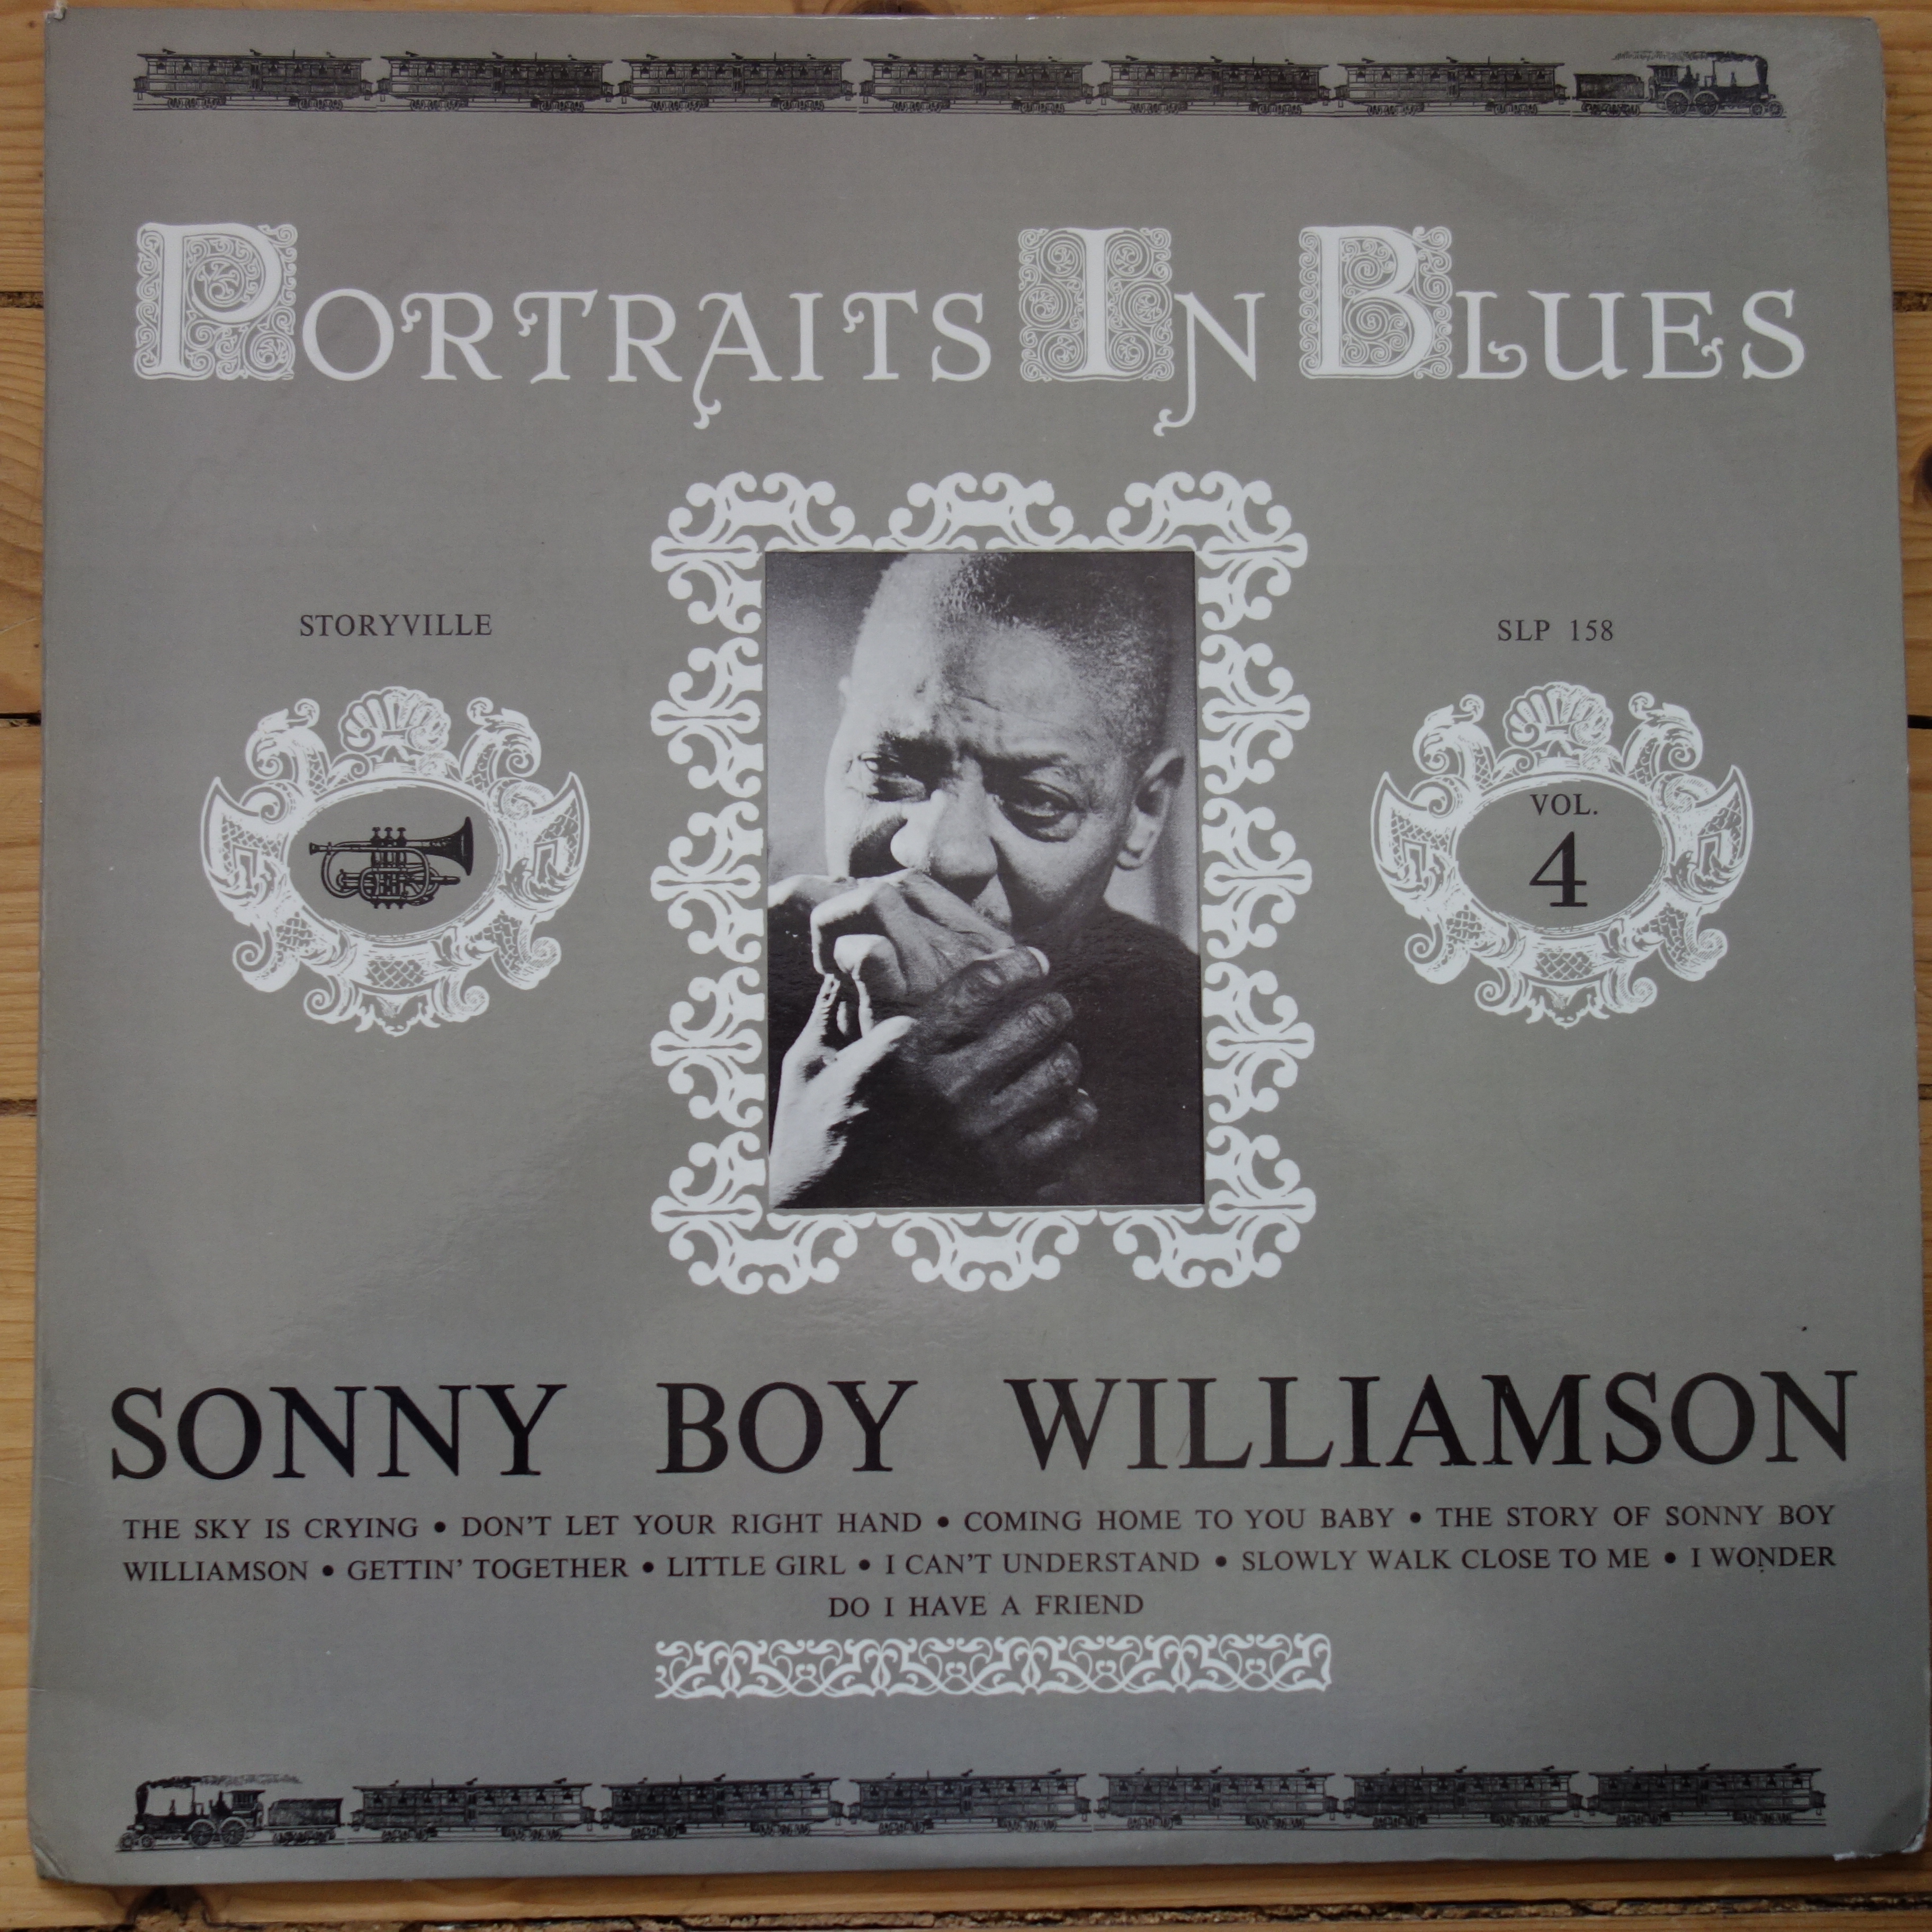 SLP 158 Sonny Boy Williamson Portraits in Blues